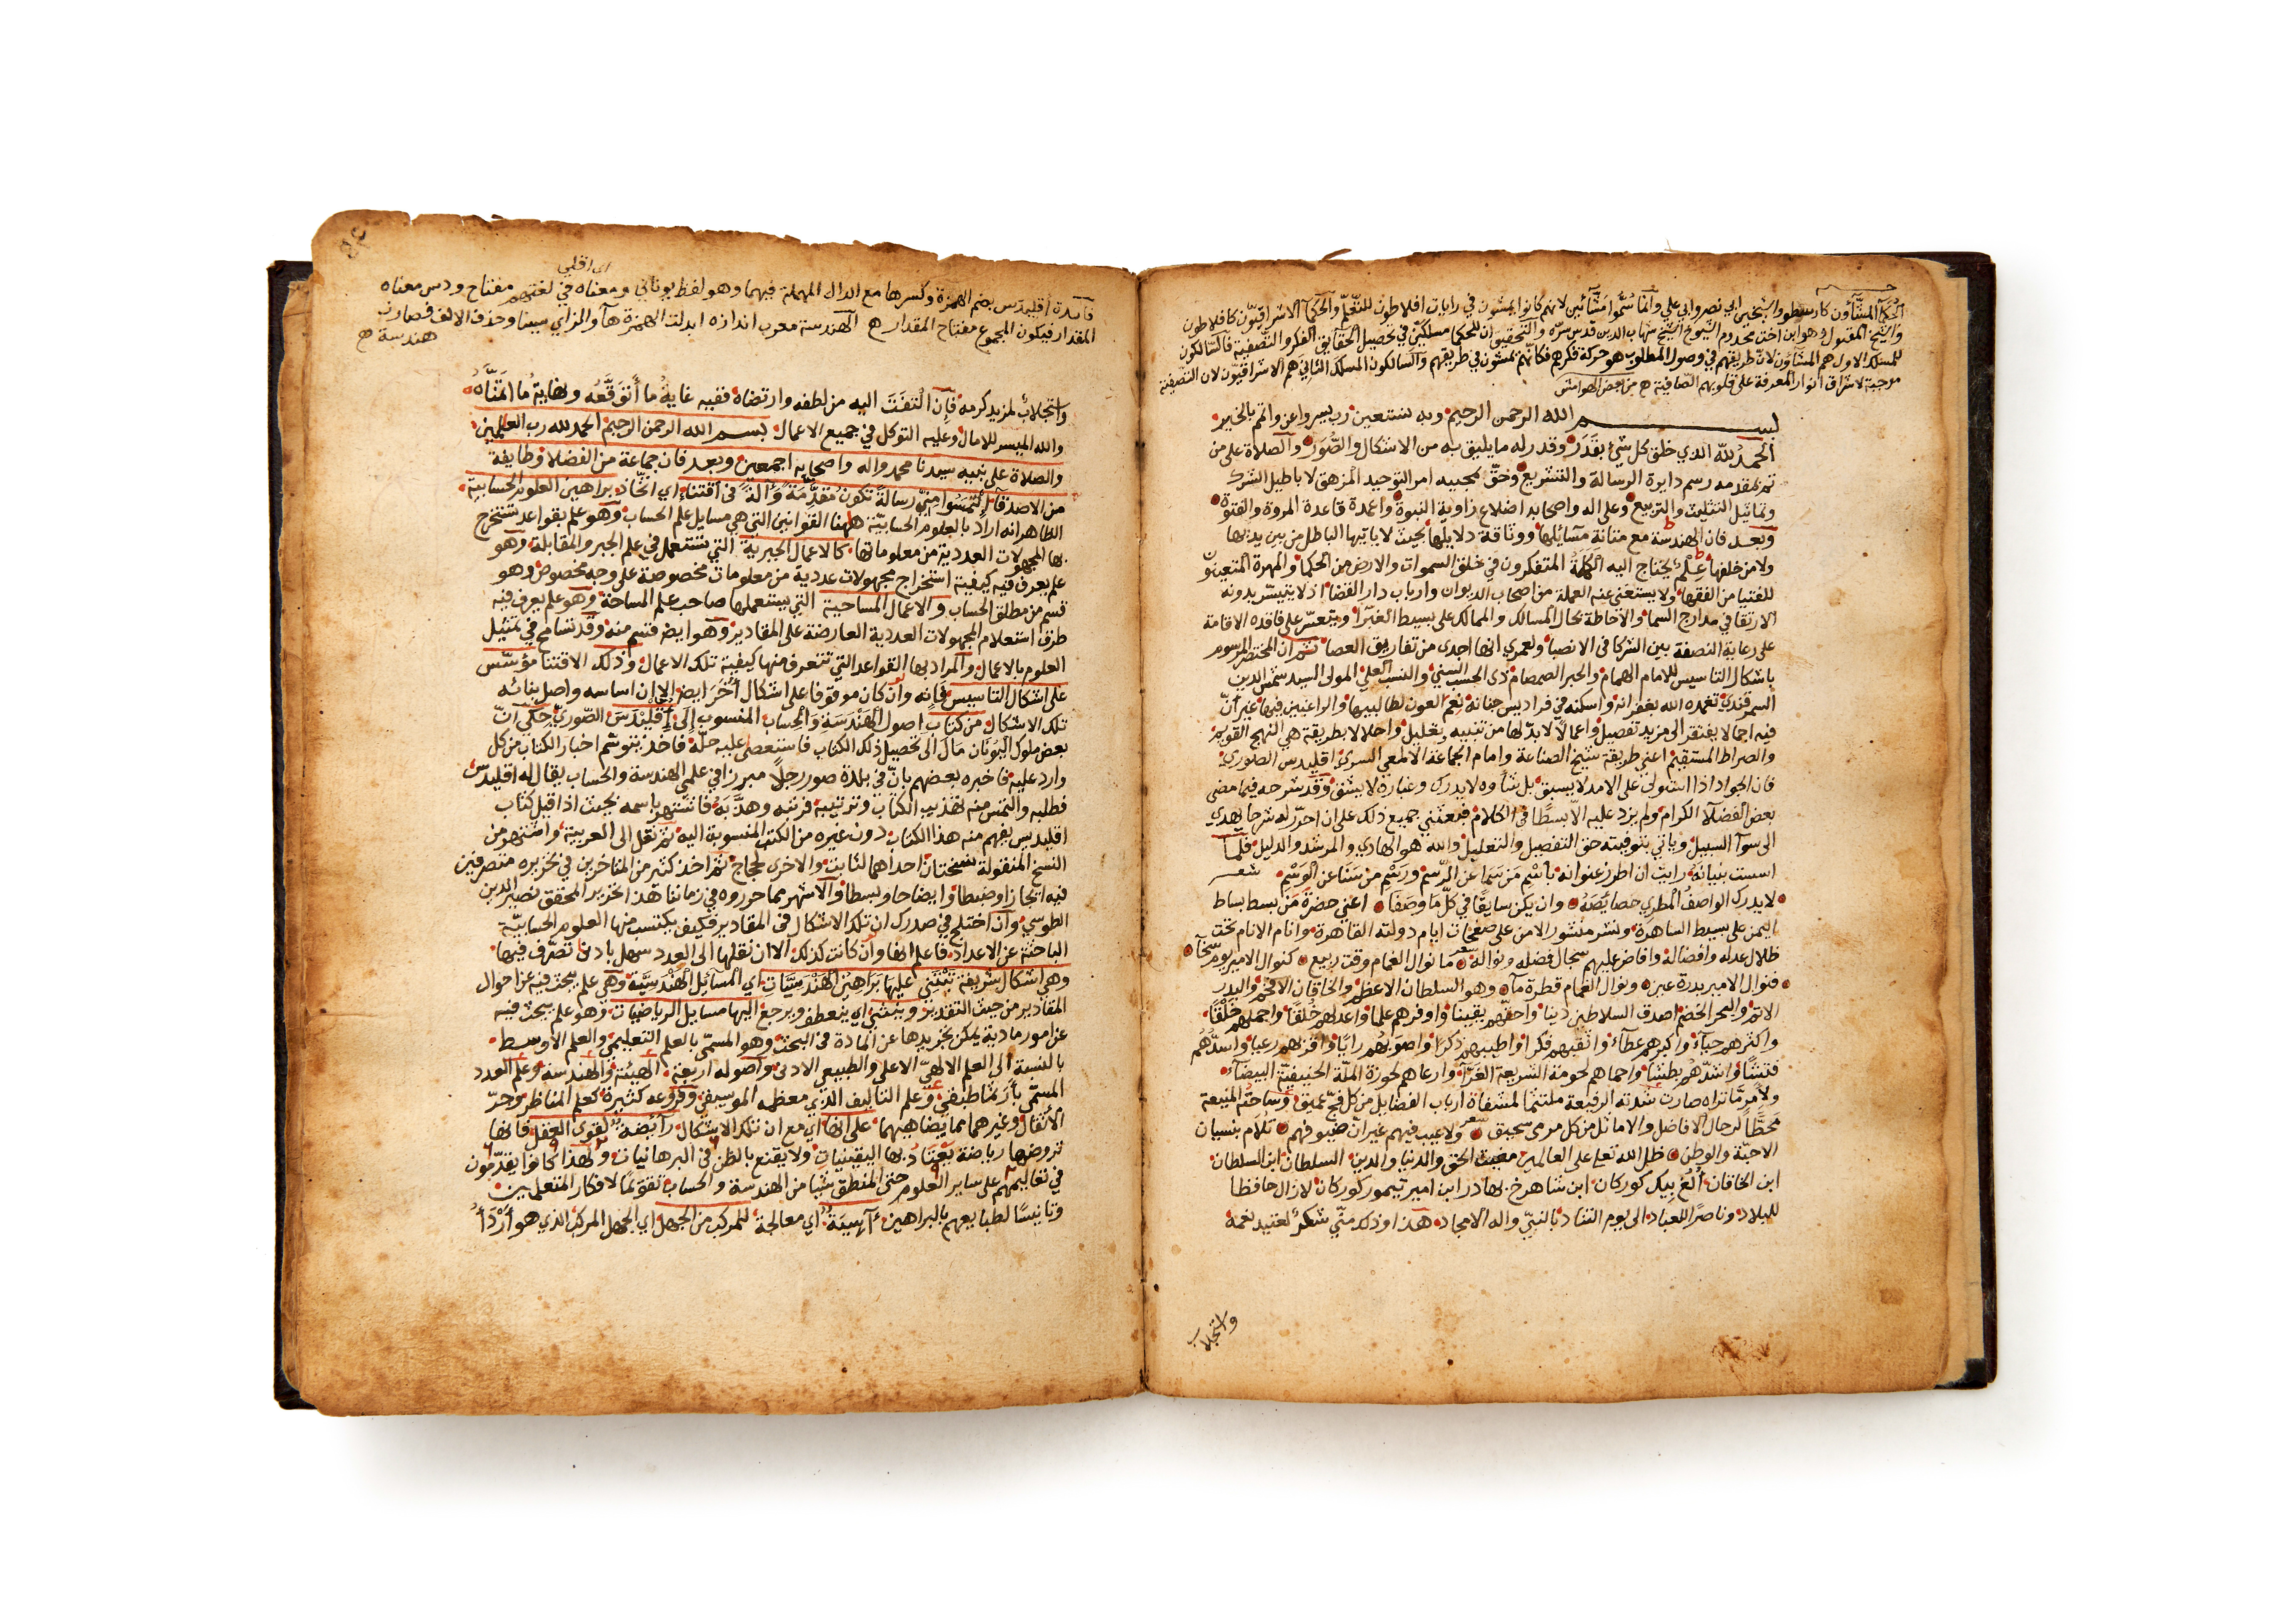 ABDUL MOUTI BIN HASSAN BIN ABDULLAH AL MEKKI, A MANUSCRIPT ABOUT GEOMETRY & MATHS, DATED 983AH - Image 12 of 16